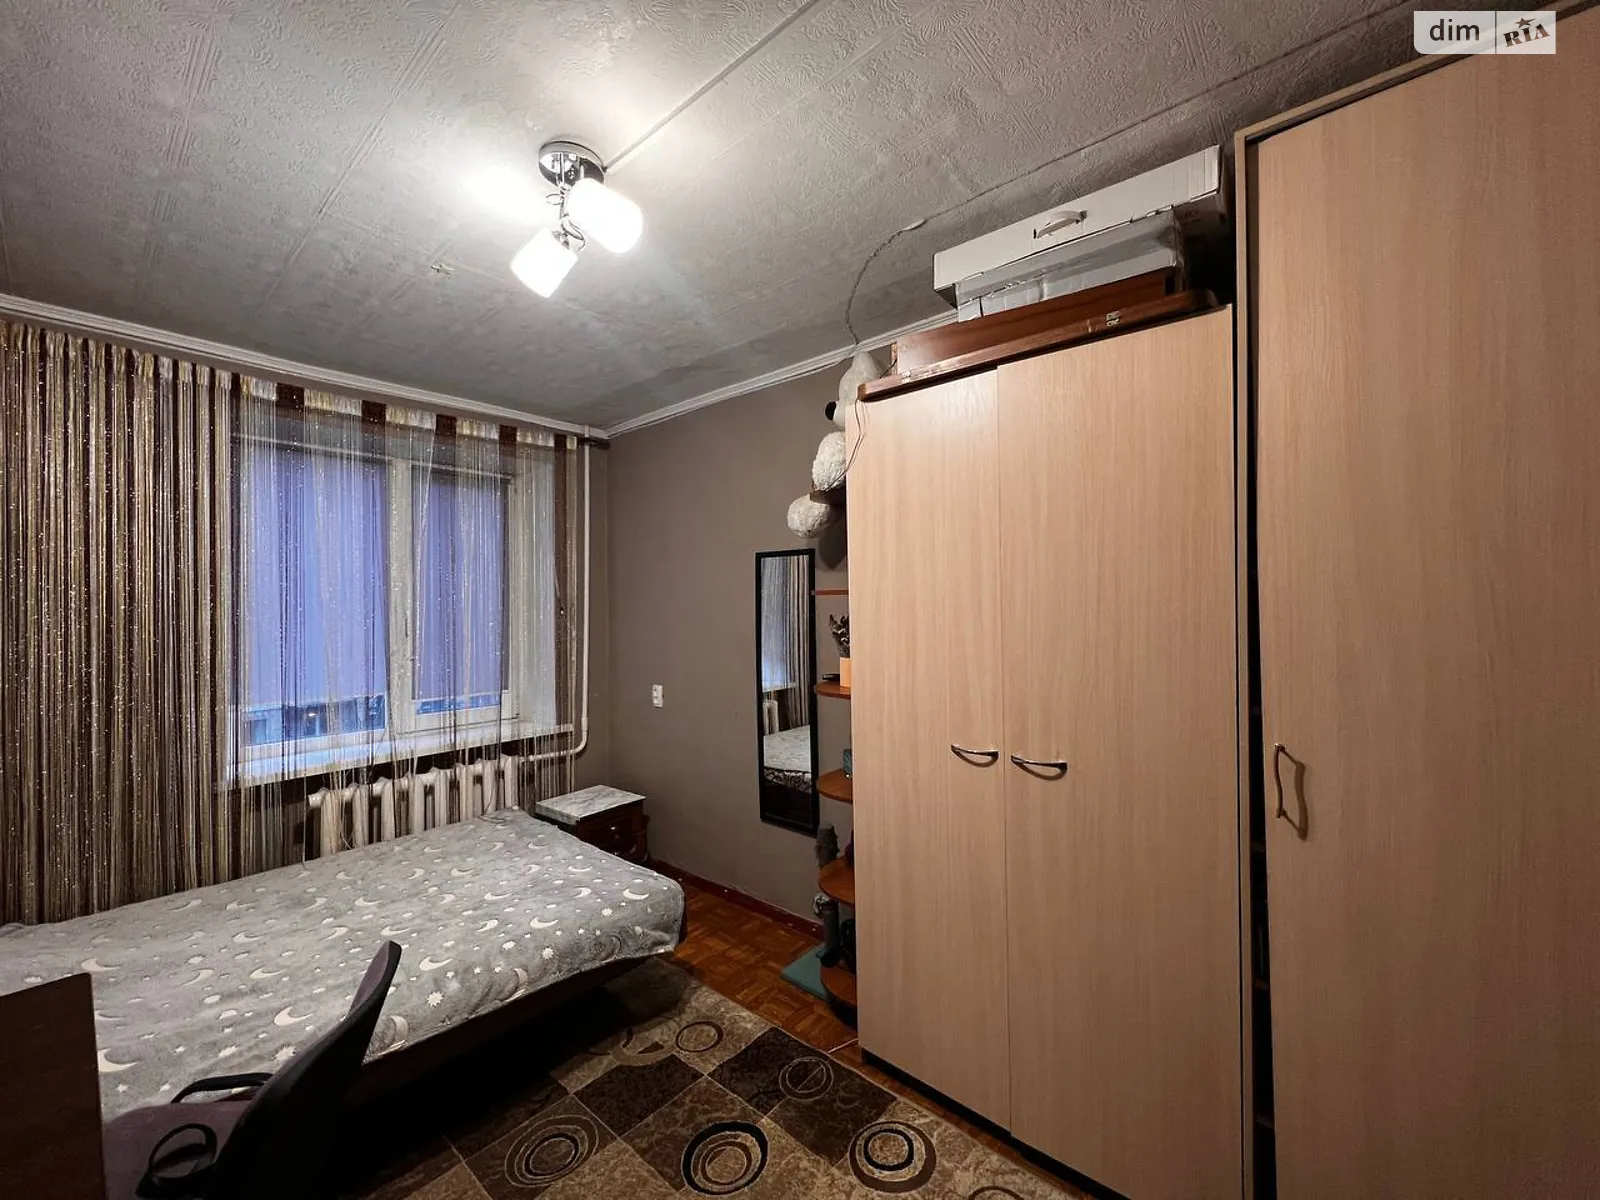 Продается комната 50 кв. м в Черкассах, цена: 21000 $ - фото 1